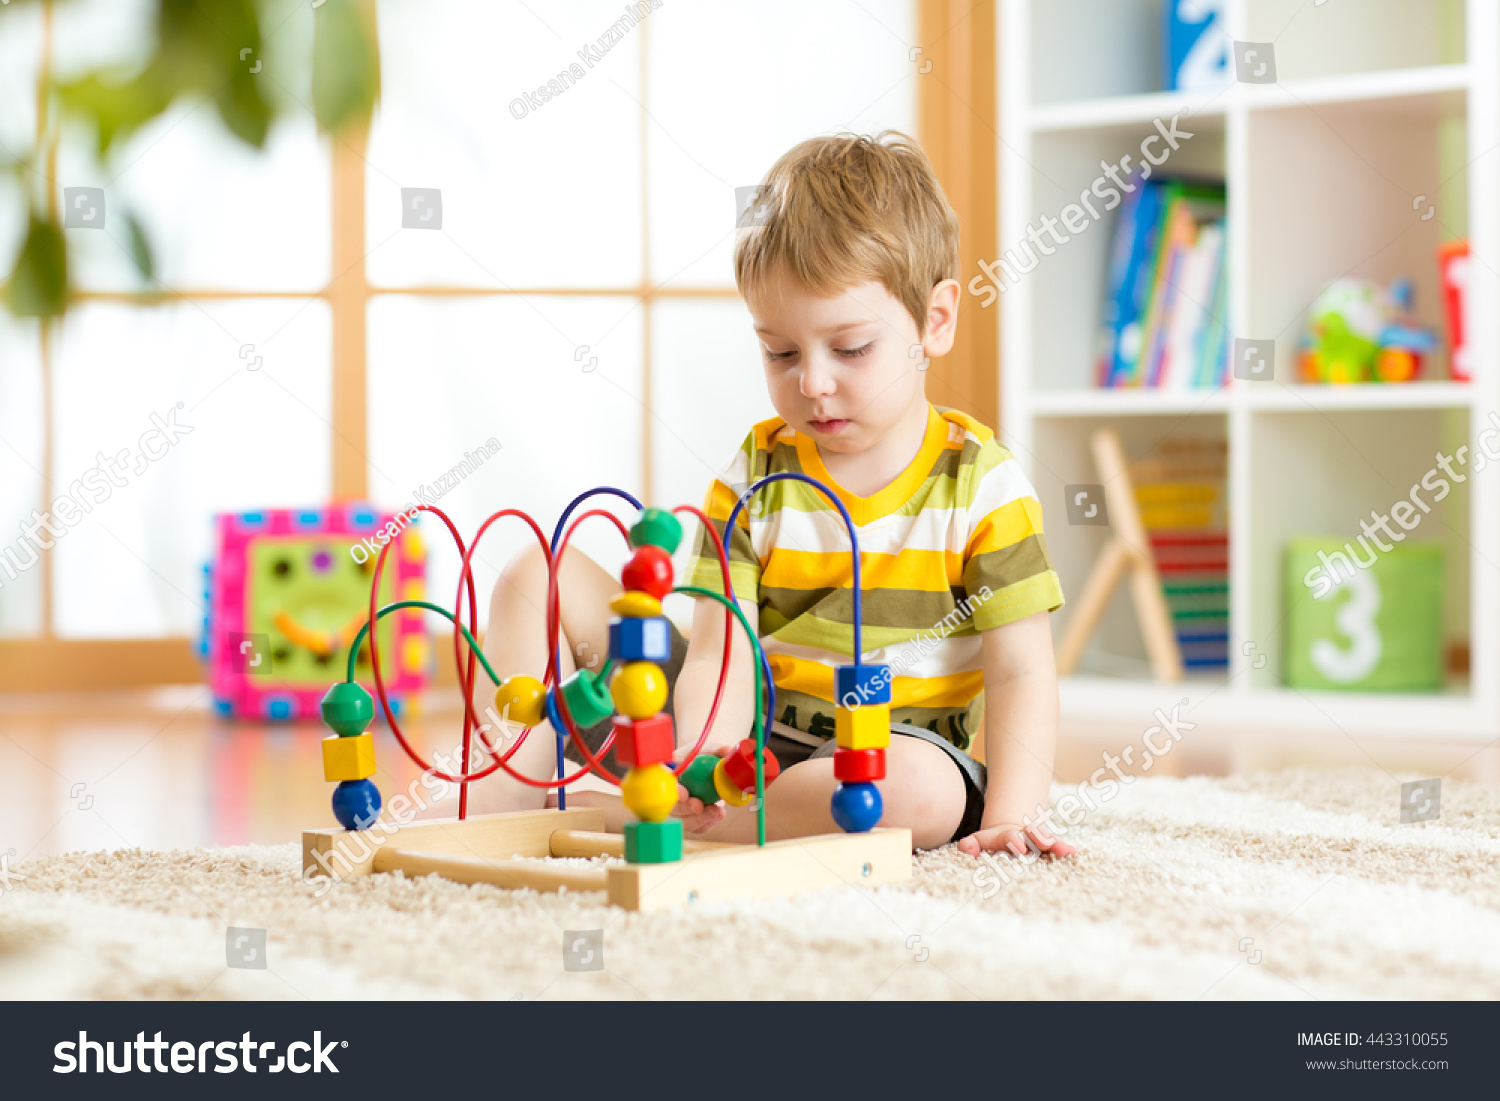 toys for kindergarten boy